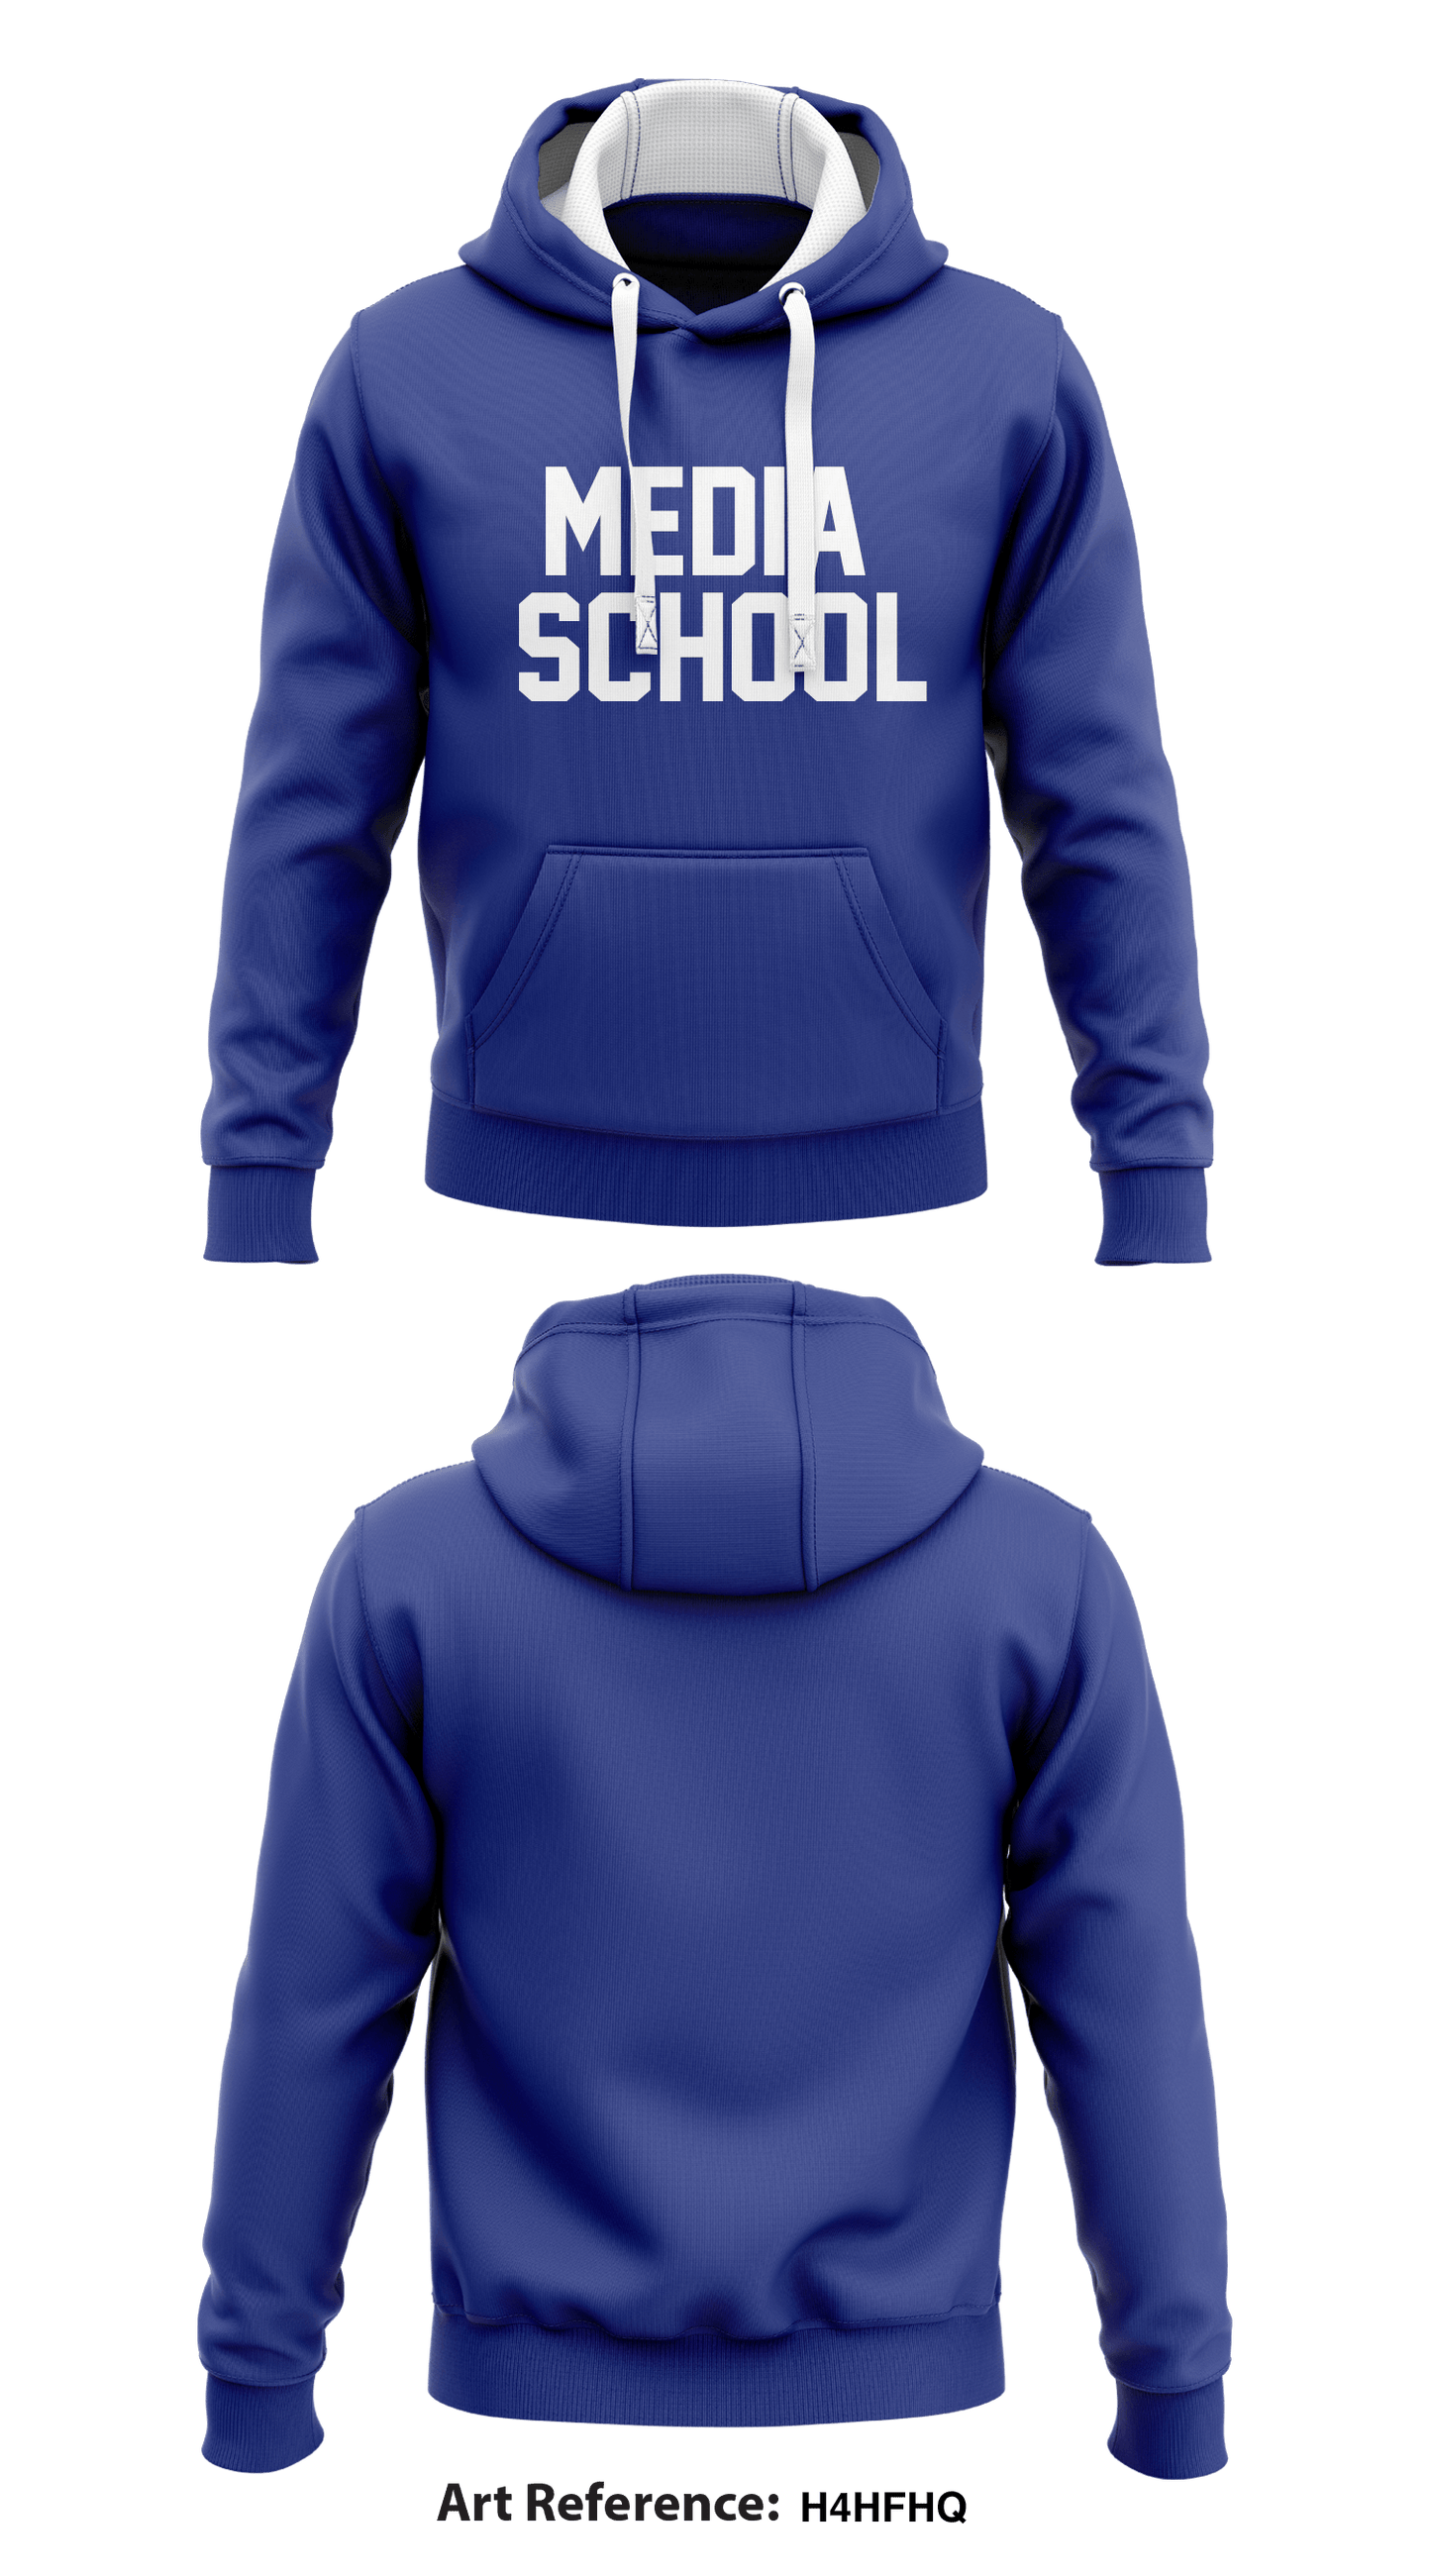 Media School Store 1  Core Men's Hooded Performance Sweatshirt - h4HfHq